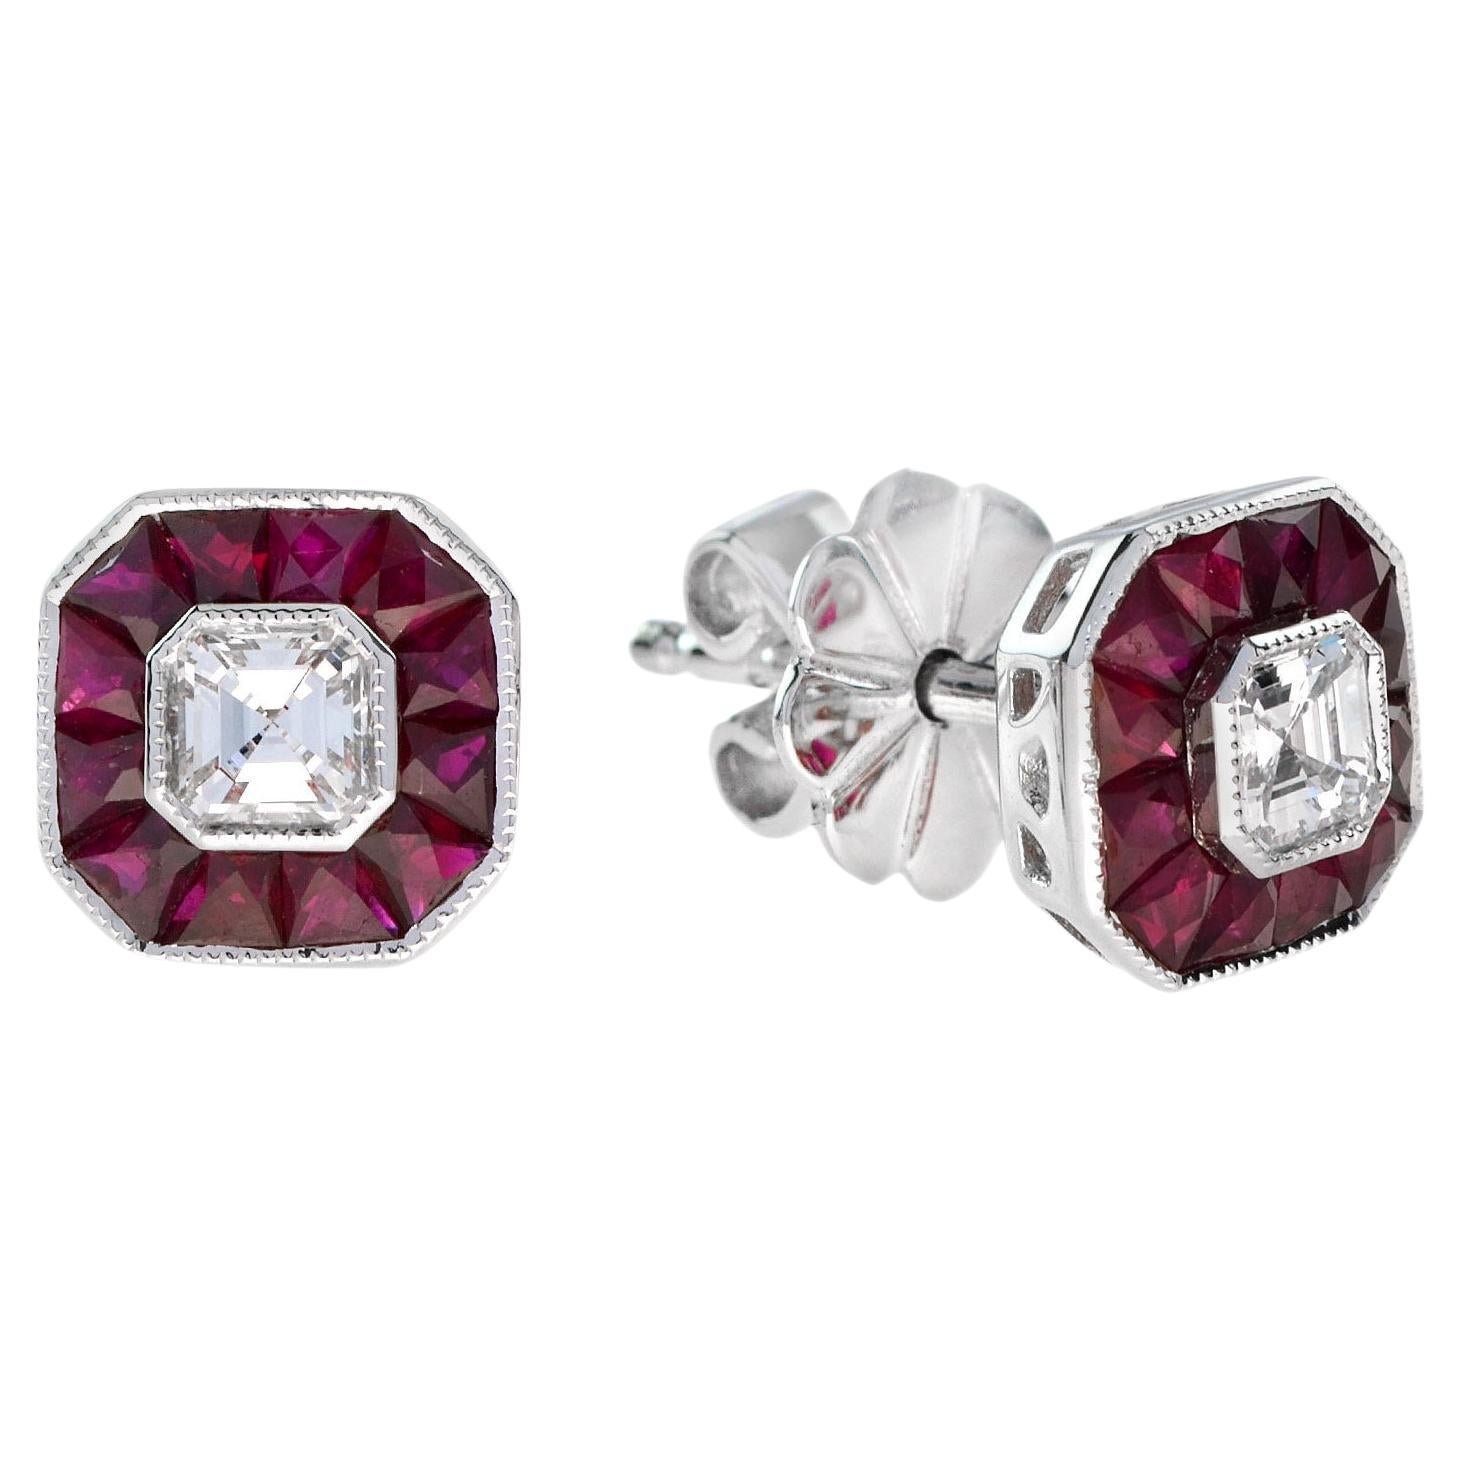 Nova Art Deco Style Diamond and French Cut Ruby Stud Earrings in 18K White Gold